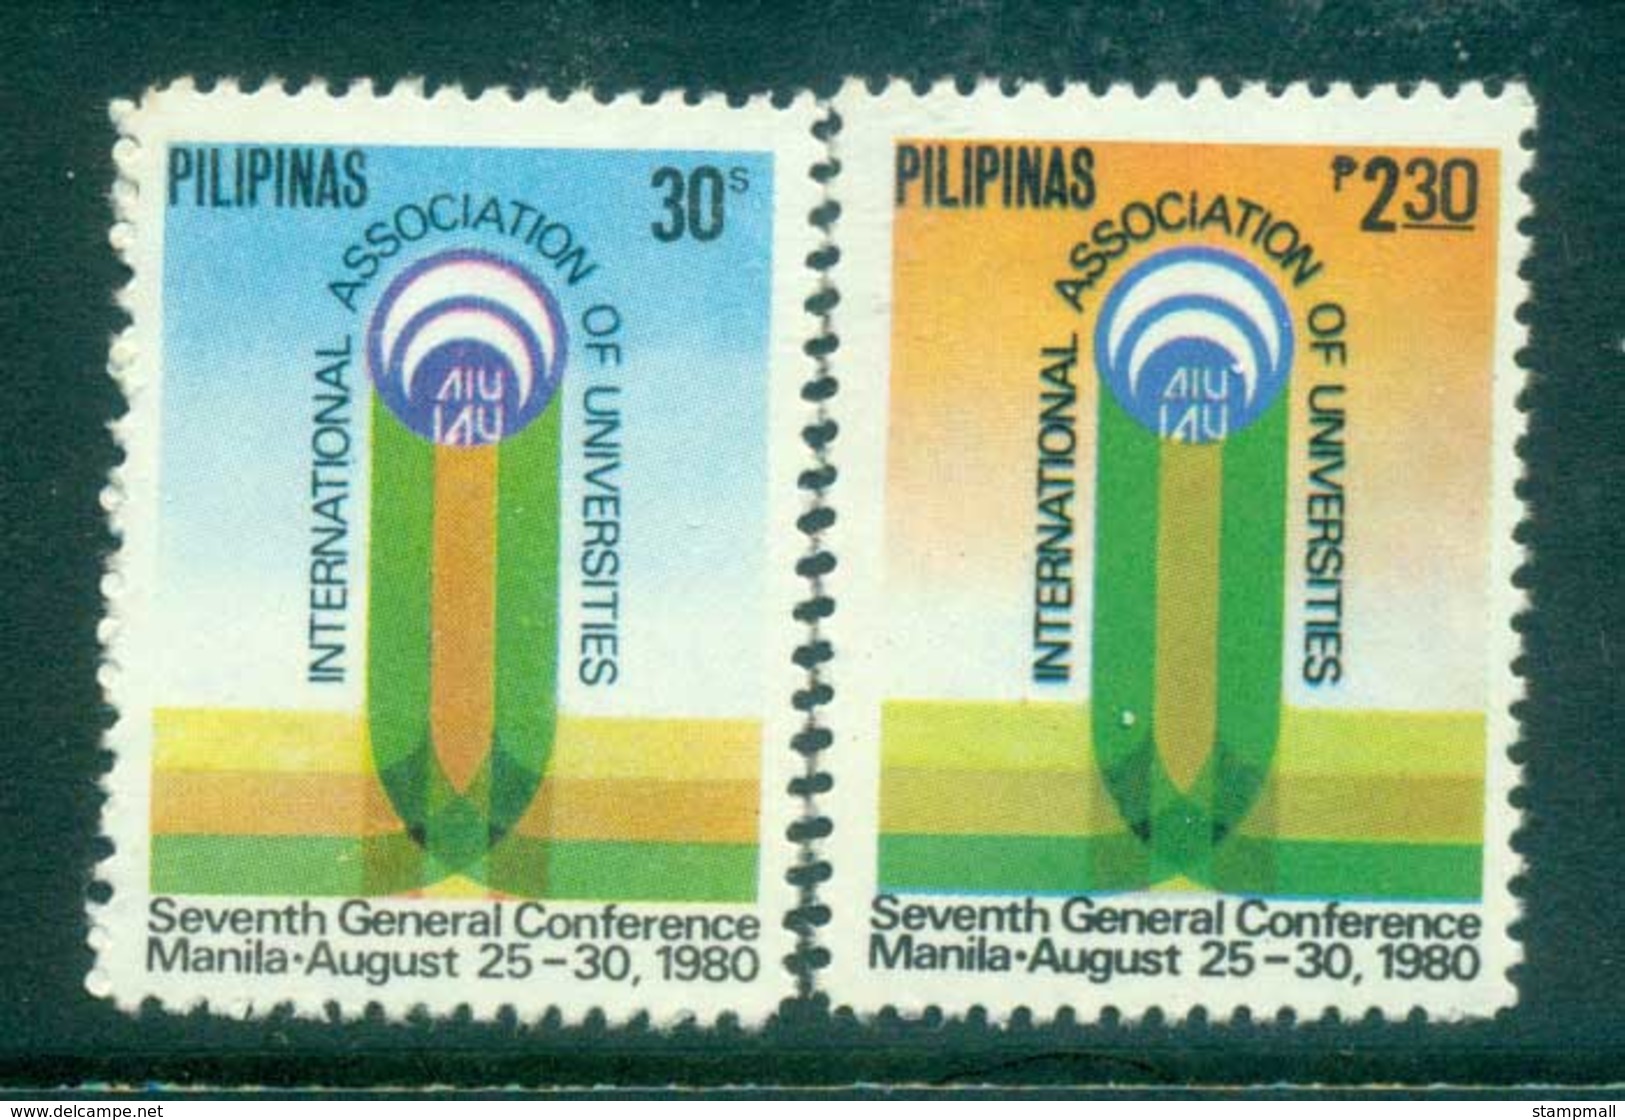 Philippines 1980 Association Of Universities MUH Lot82552 - Philippines